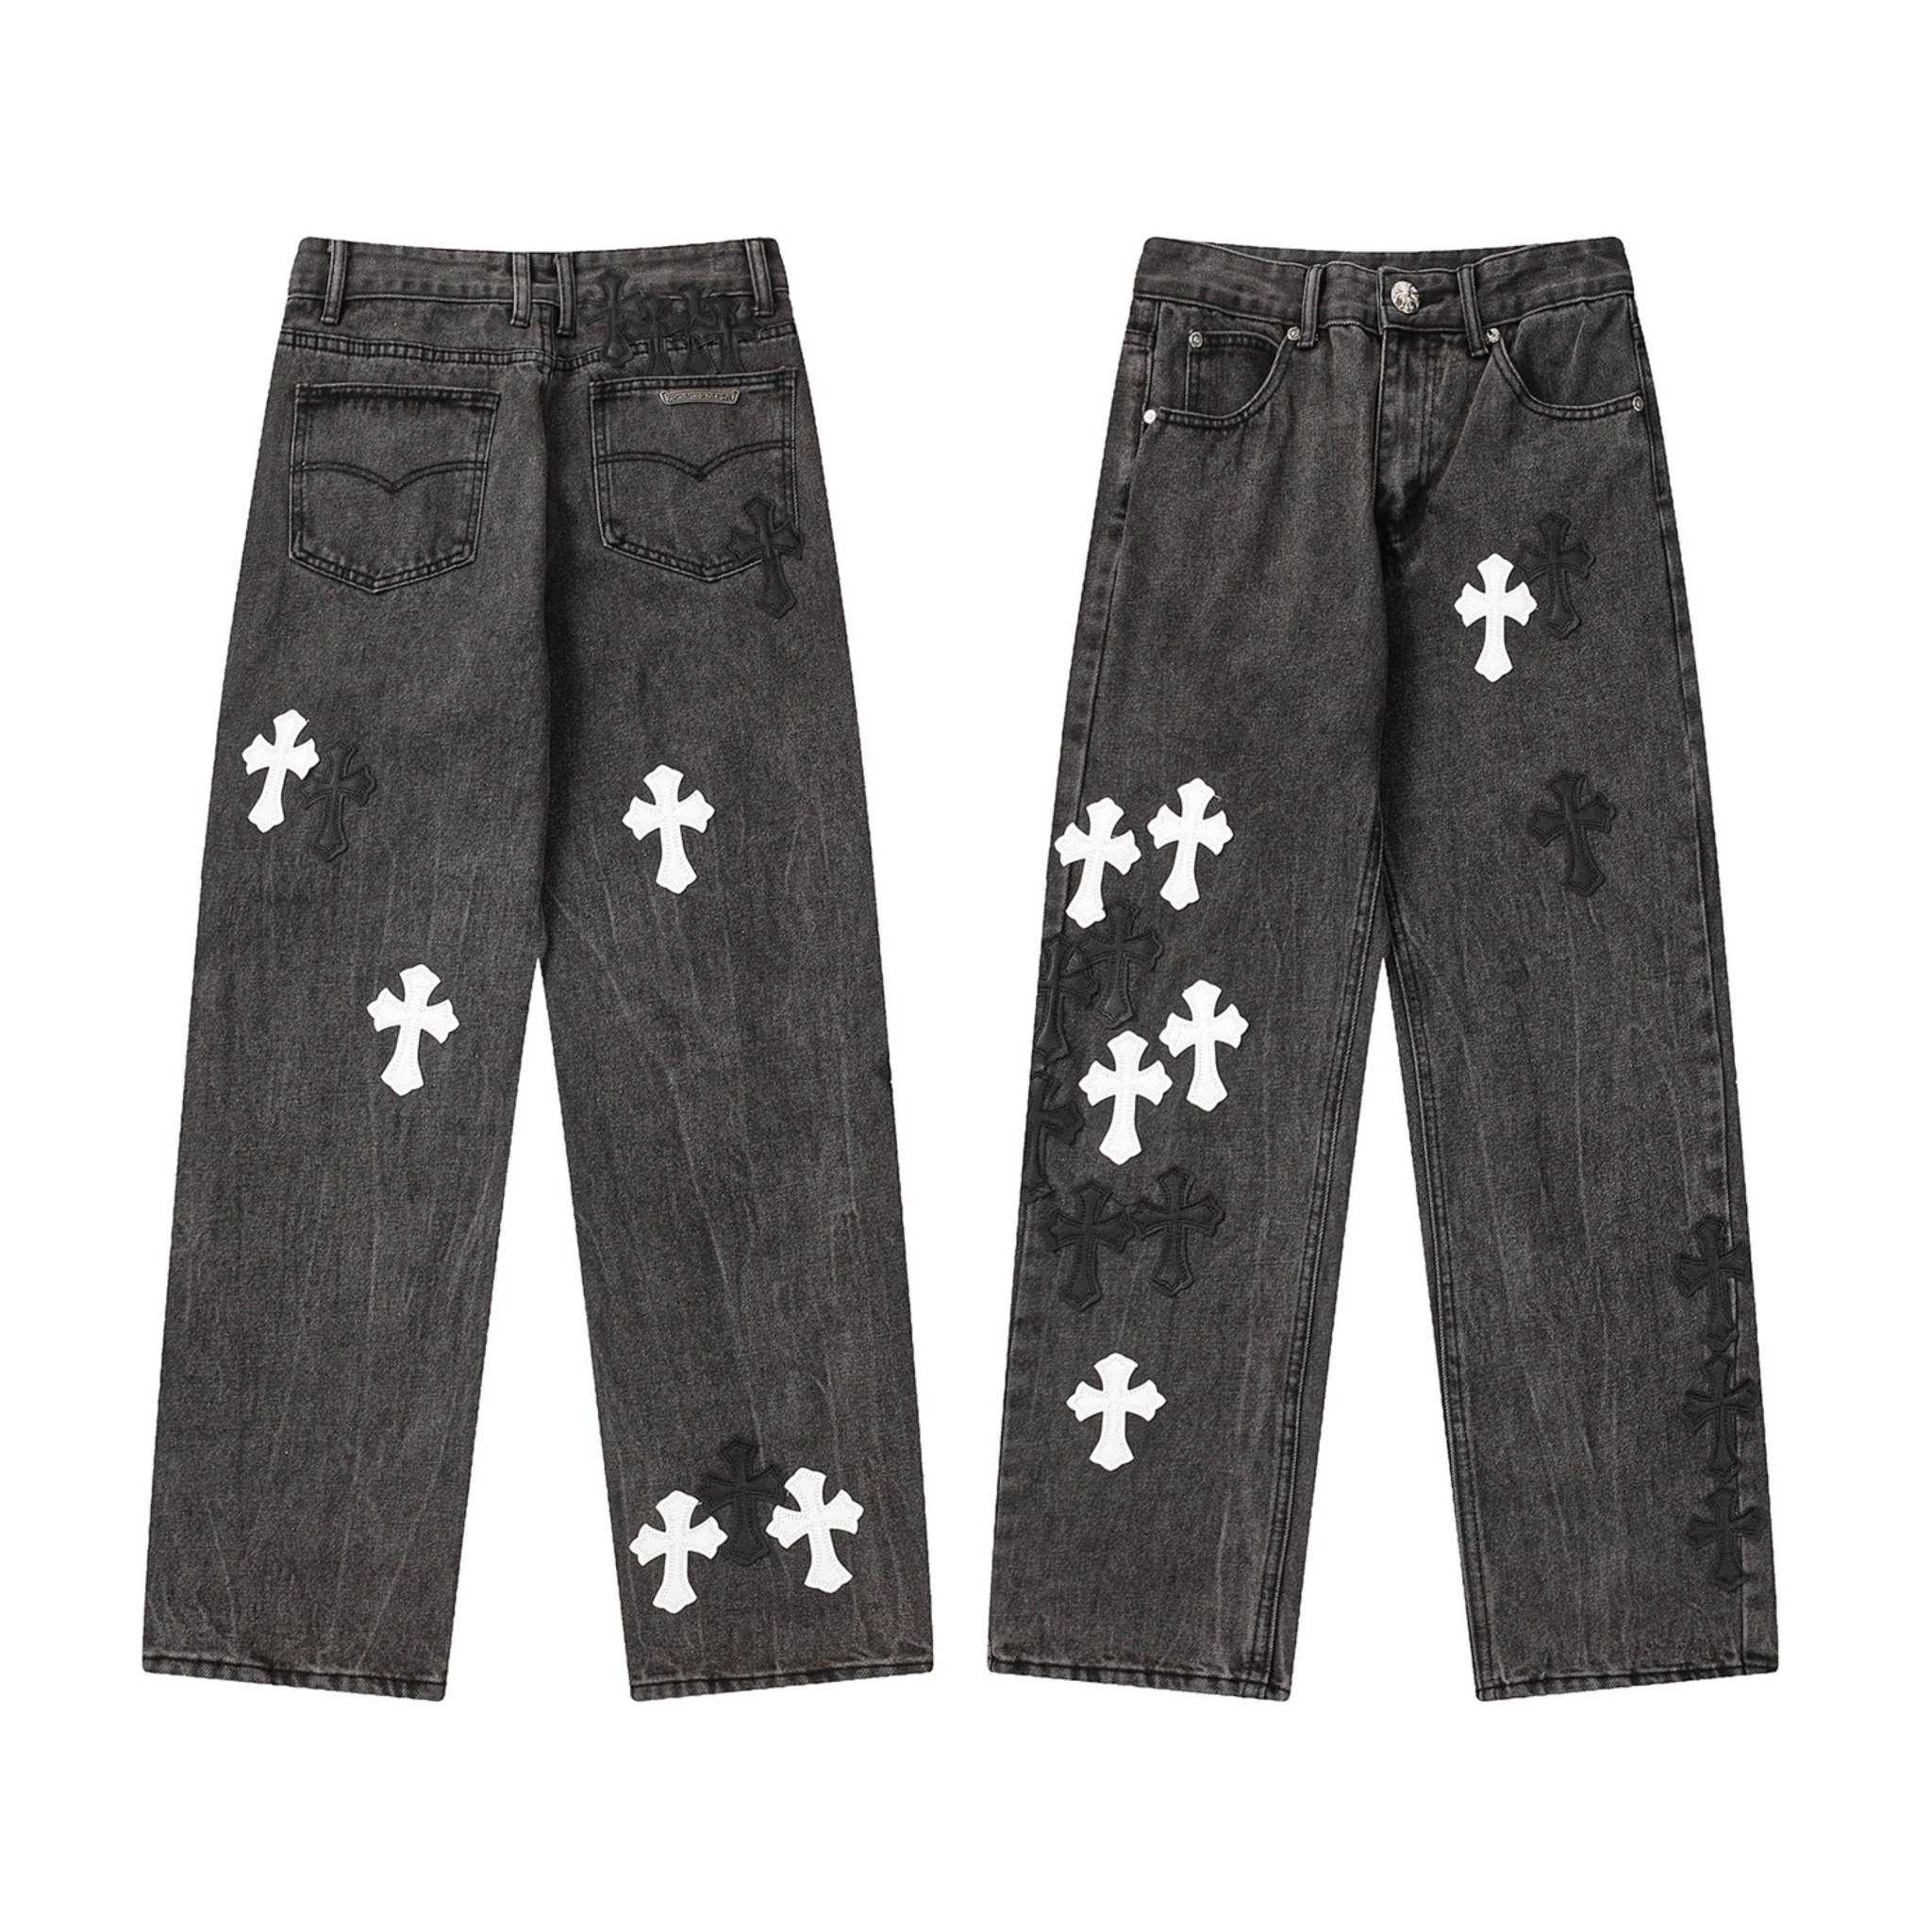 Chrome Heart Cross Patch Denim Jeans - DesignerGu